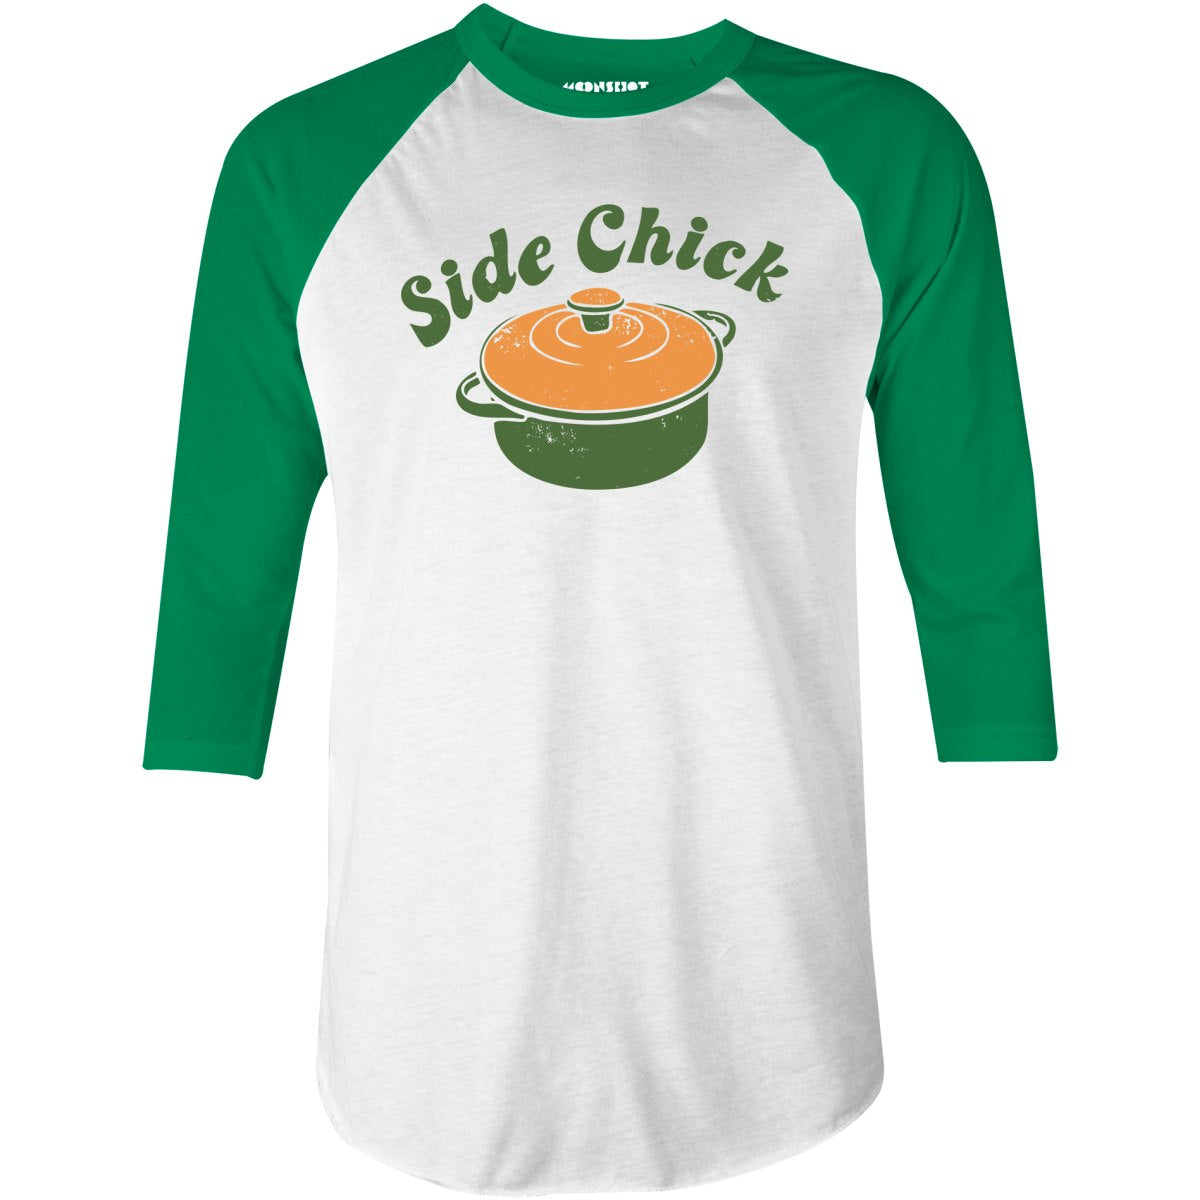 Side Chick - 3/4 Sleeve Raglan T-Shirt